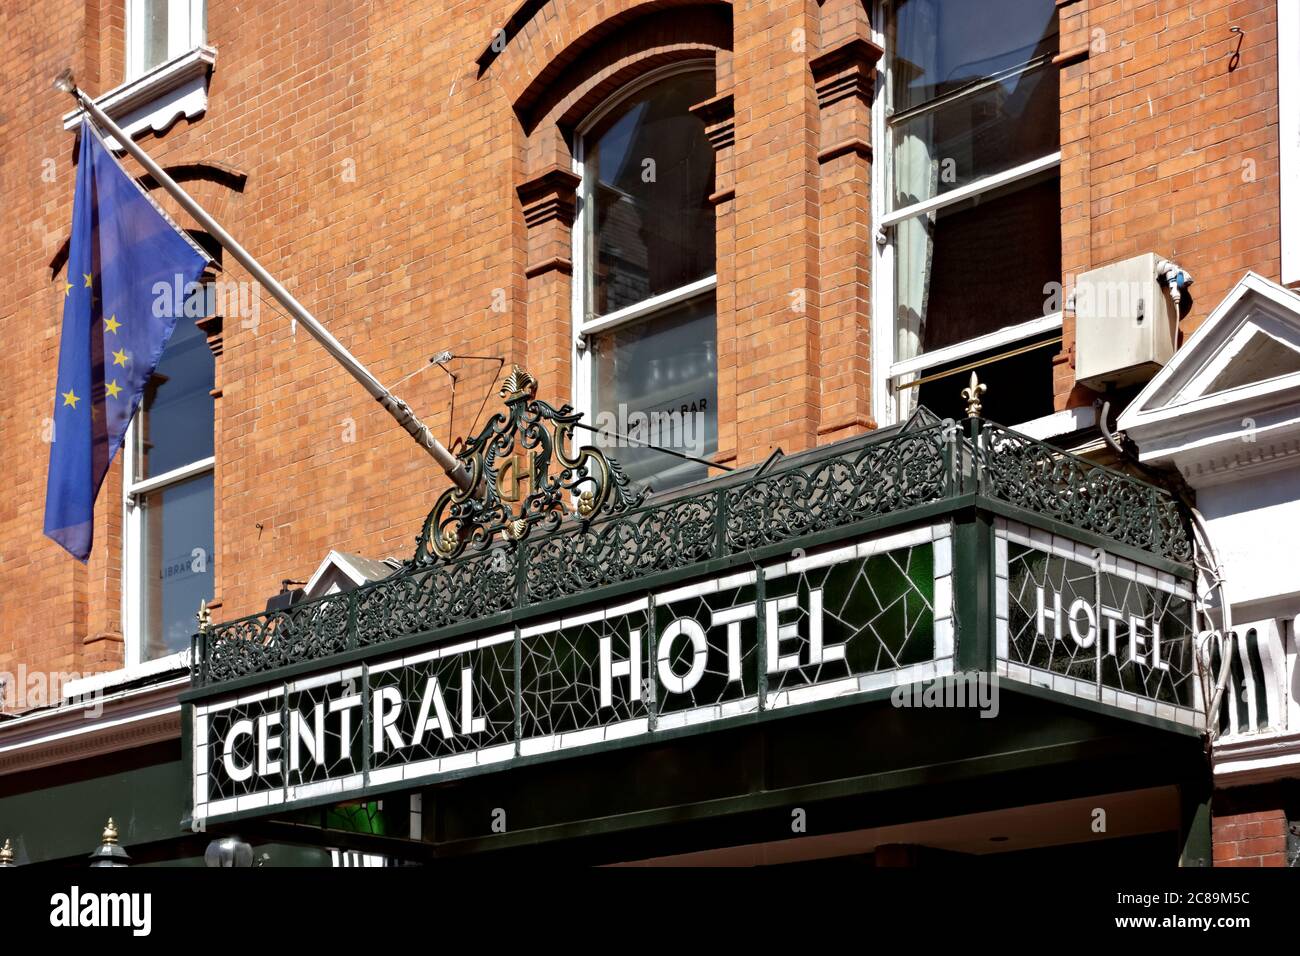 Retro stained glass sign at the Central Hotel, exterior. Red bricks building facade. Travel destinations. Dublin City, Ireland, Europe. EU. Close up. Stock Photo